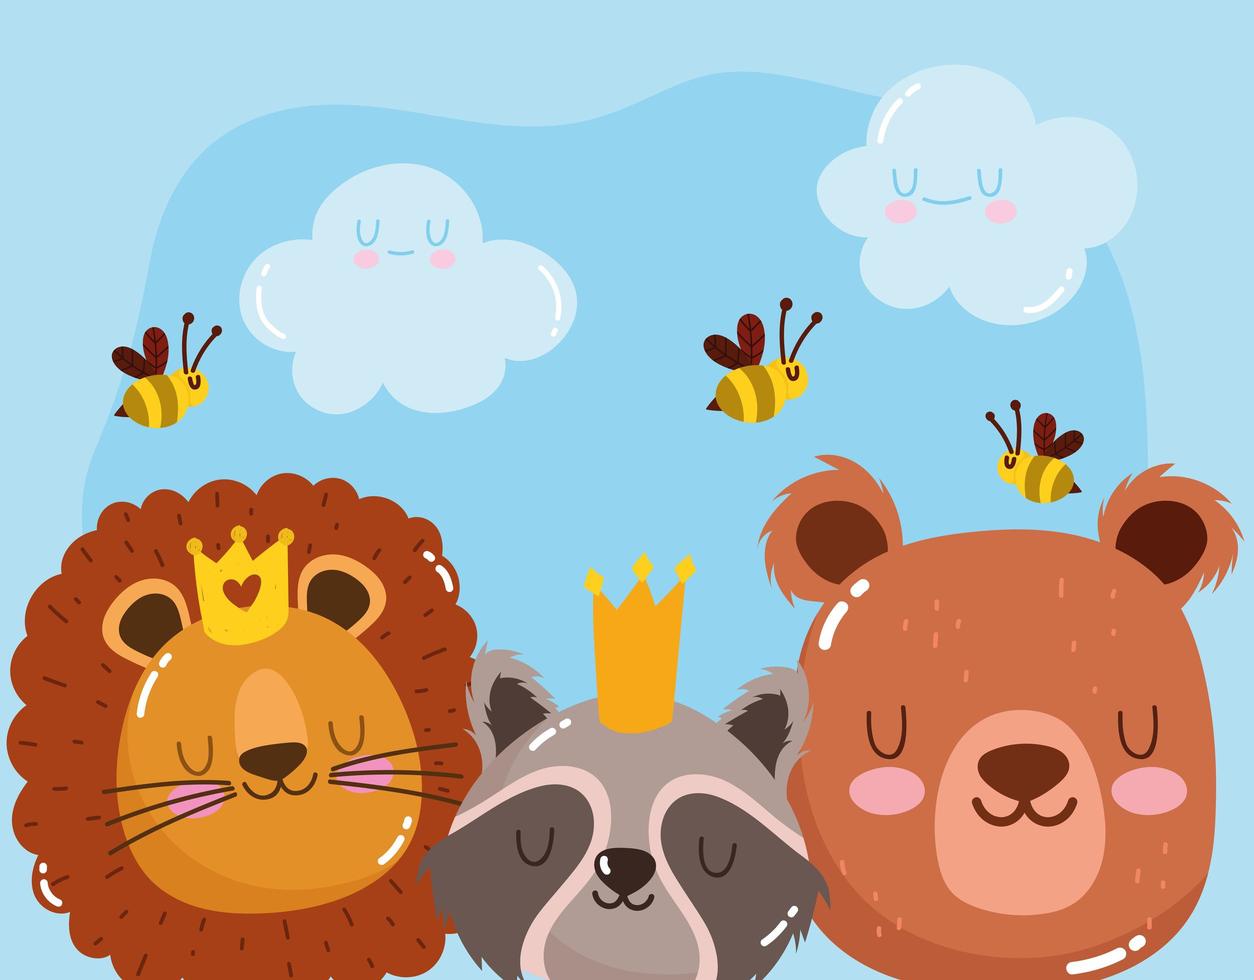 animales lindos caras adorables león oso mapache con abejas y coronas dibujos animados vector